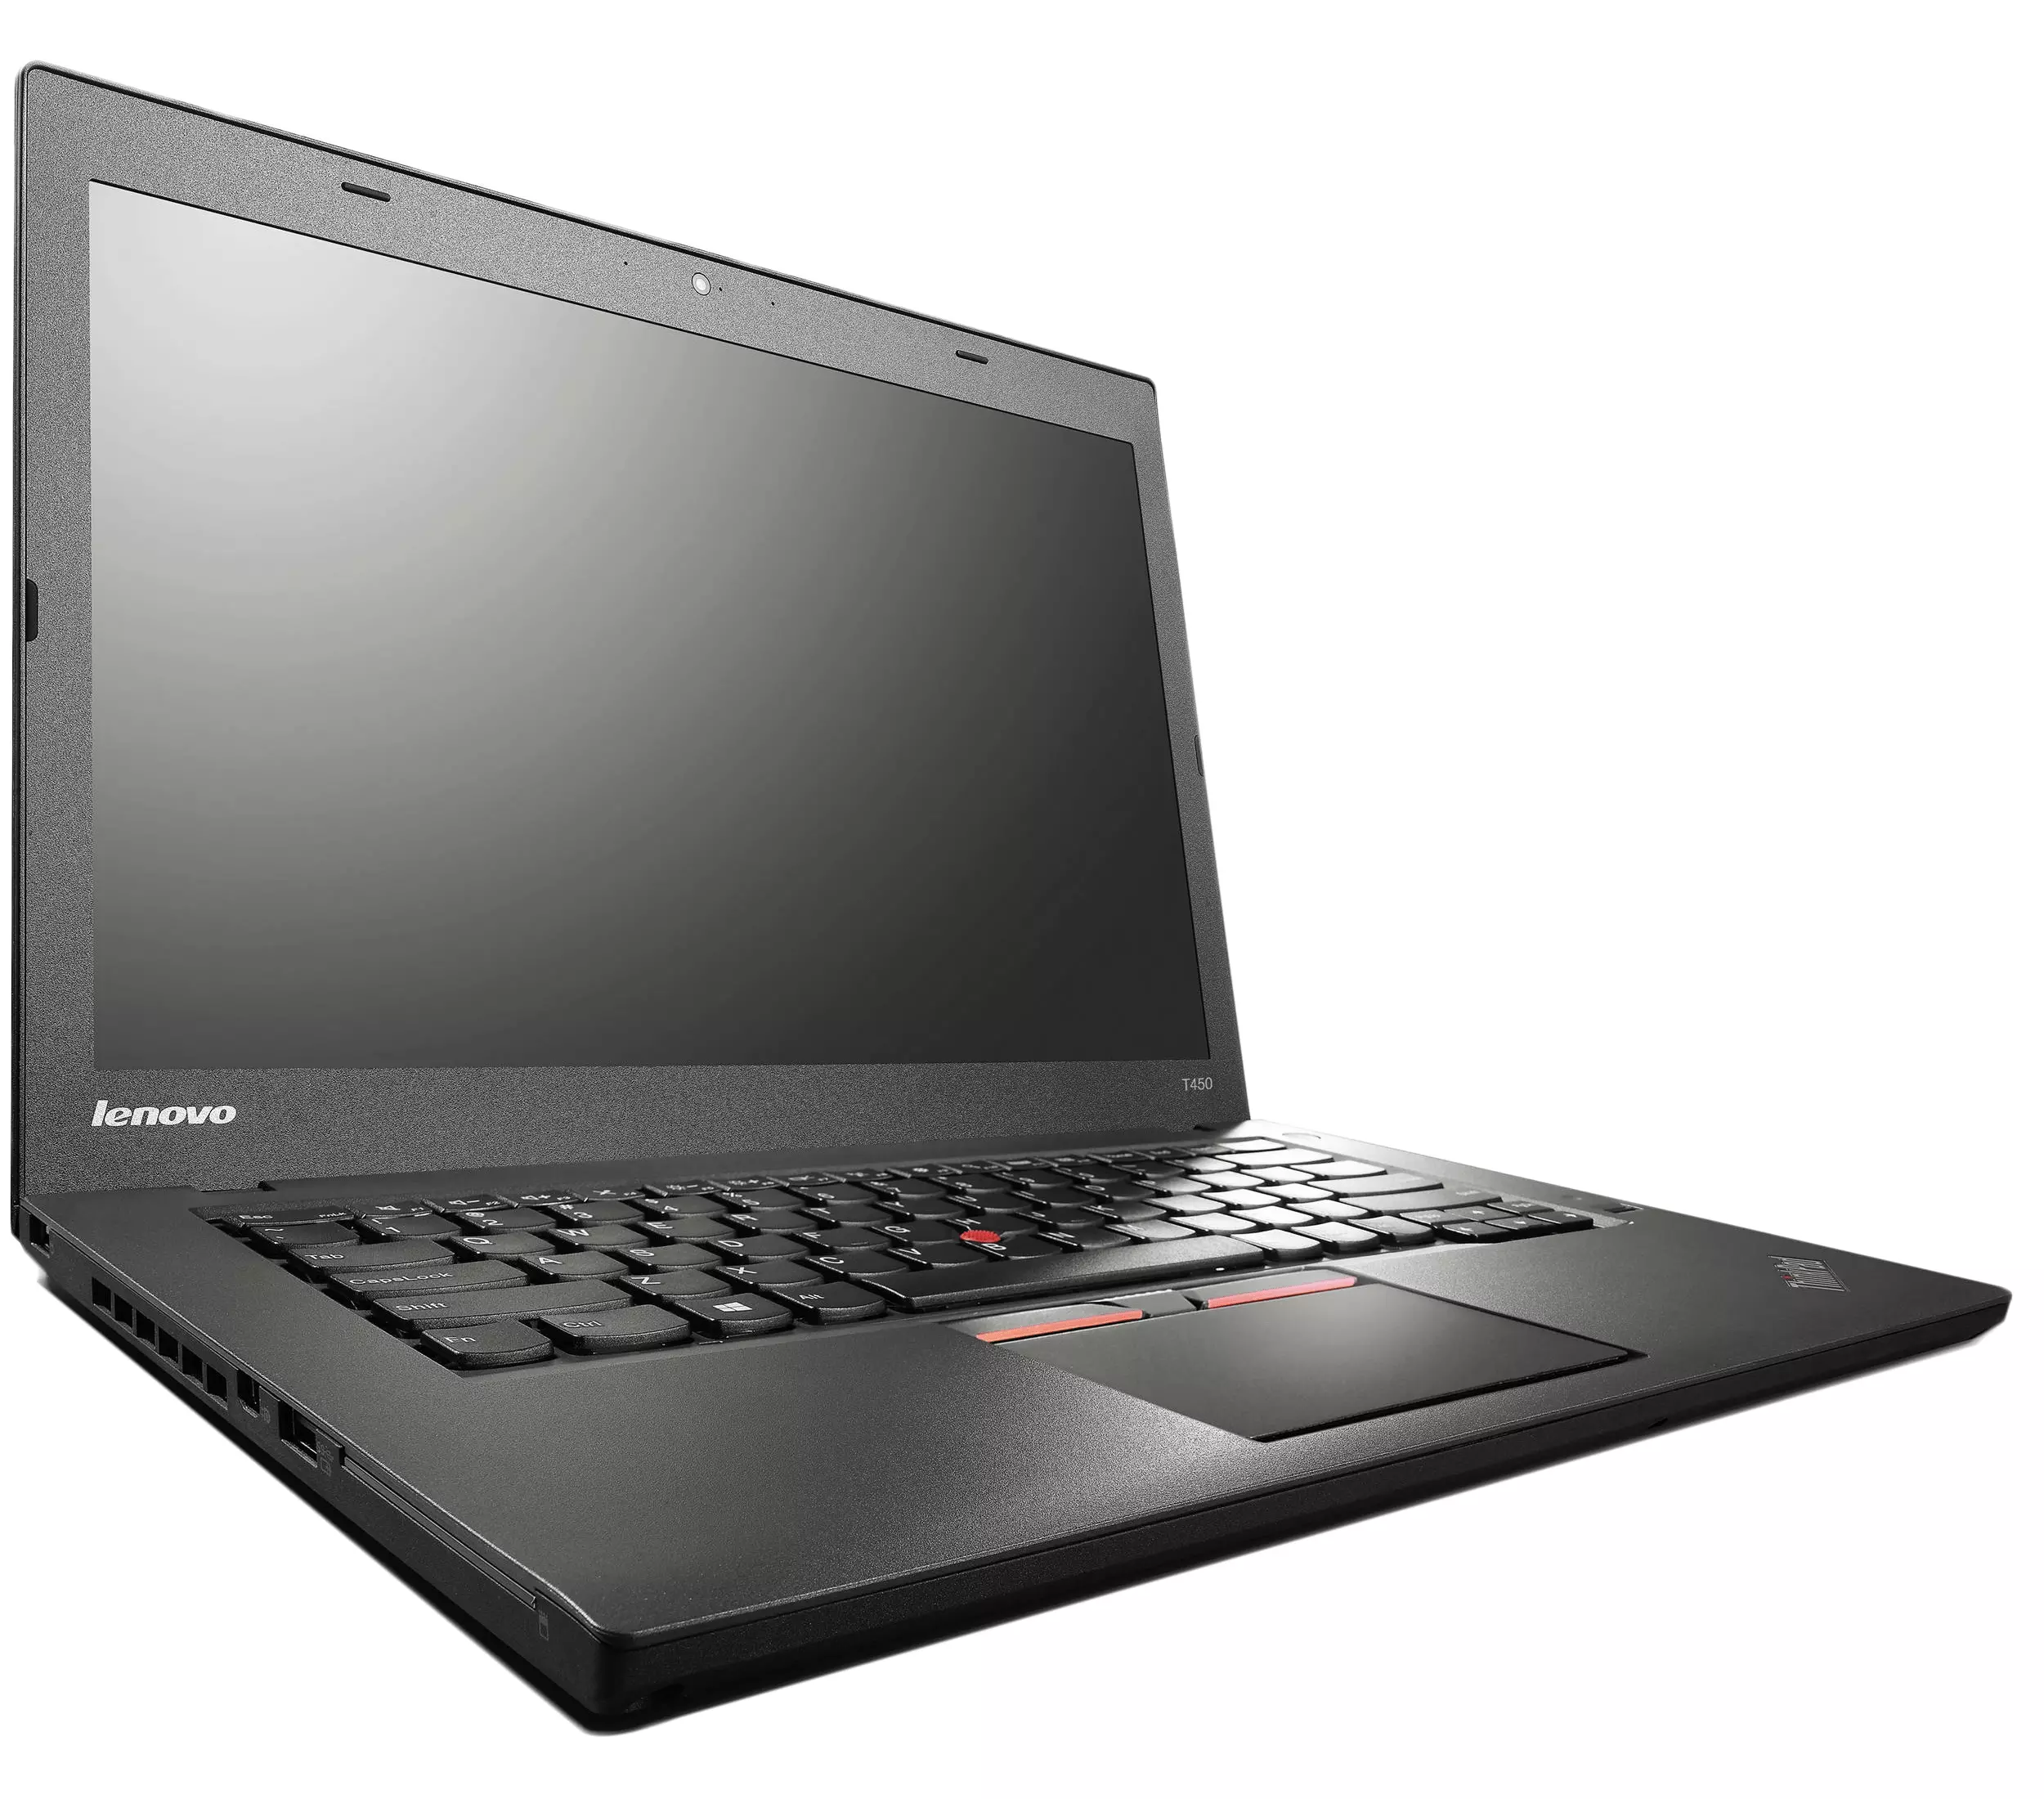 Notebook Lenovo ThinkPad T450 - RAM 8Gb - SSD 240Gb - WIN 10 PRO (PC)